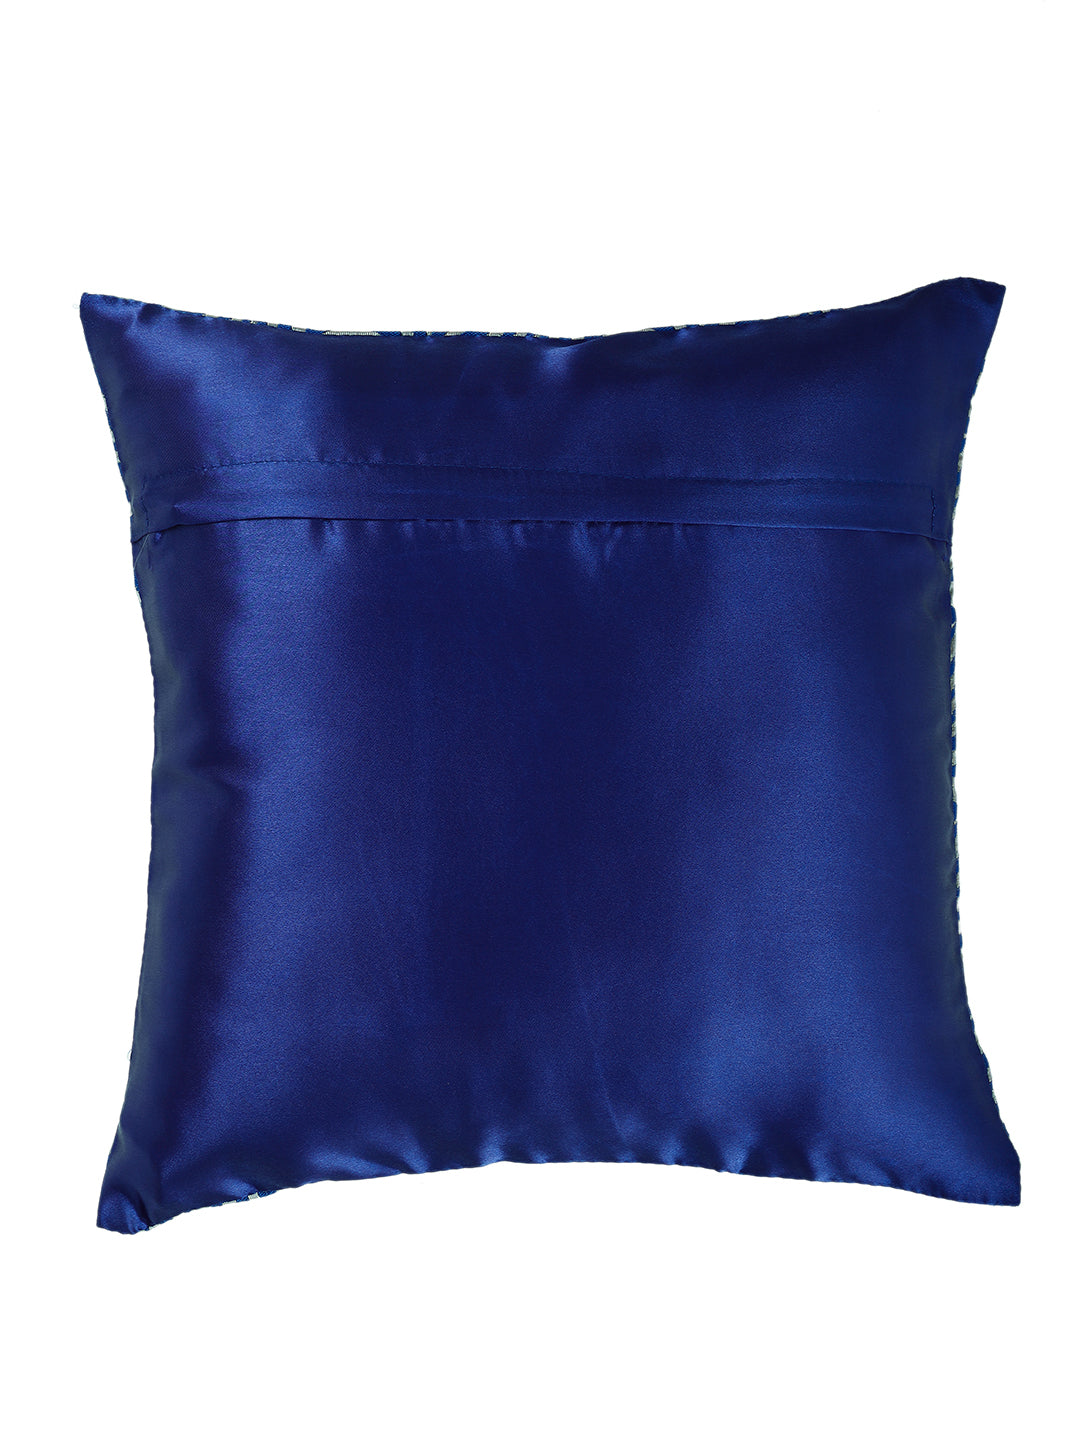 Silkfab Set 0f 5 Decorative Silk Cushion Covers (16x16) Floral Blue - SILKFAB